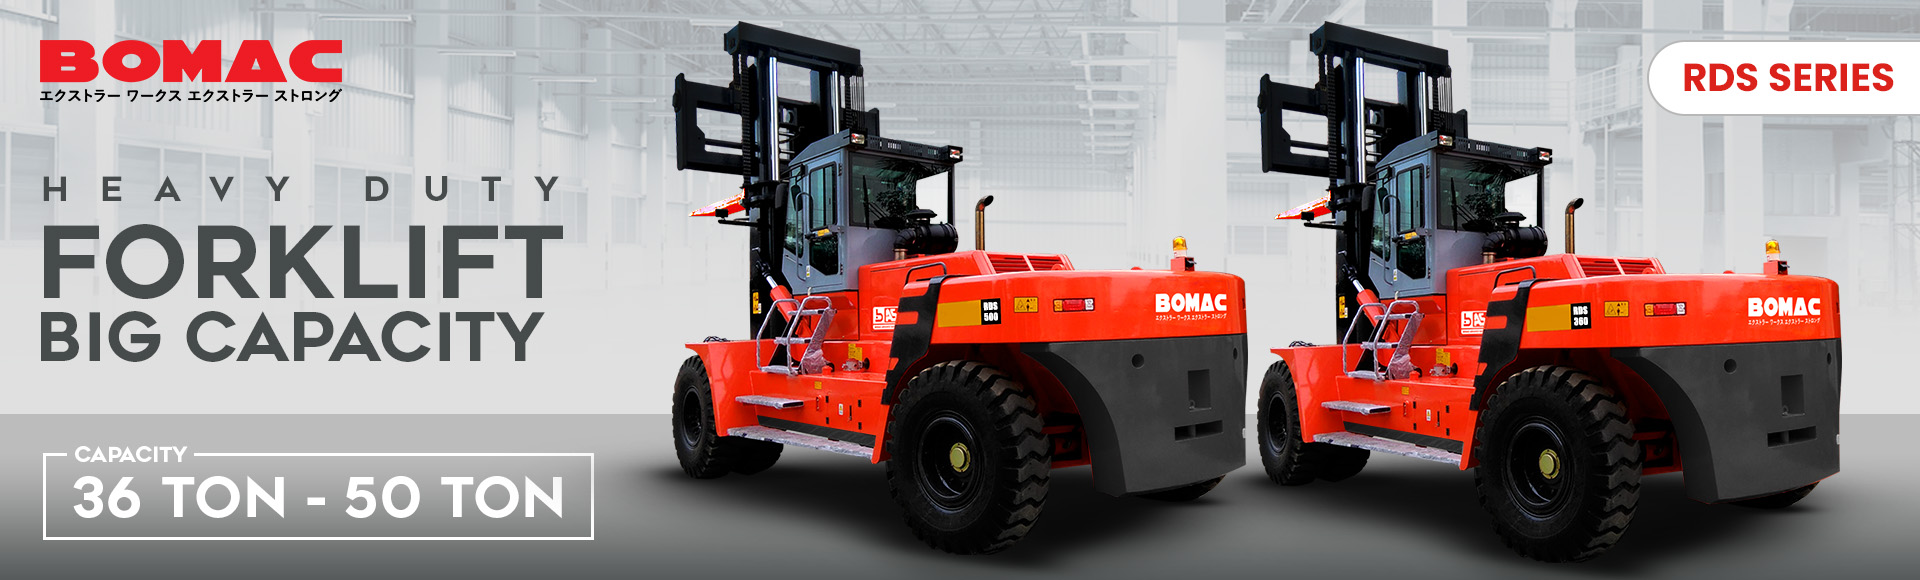 Banner Bomac Forklift Big Capacity RDS Series 36 Ton - 50 Ton